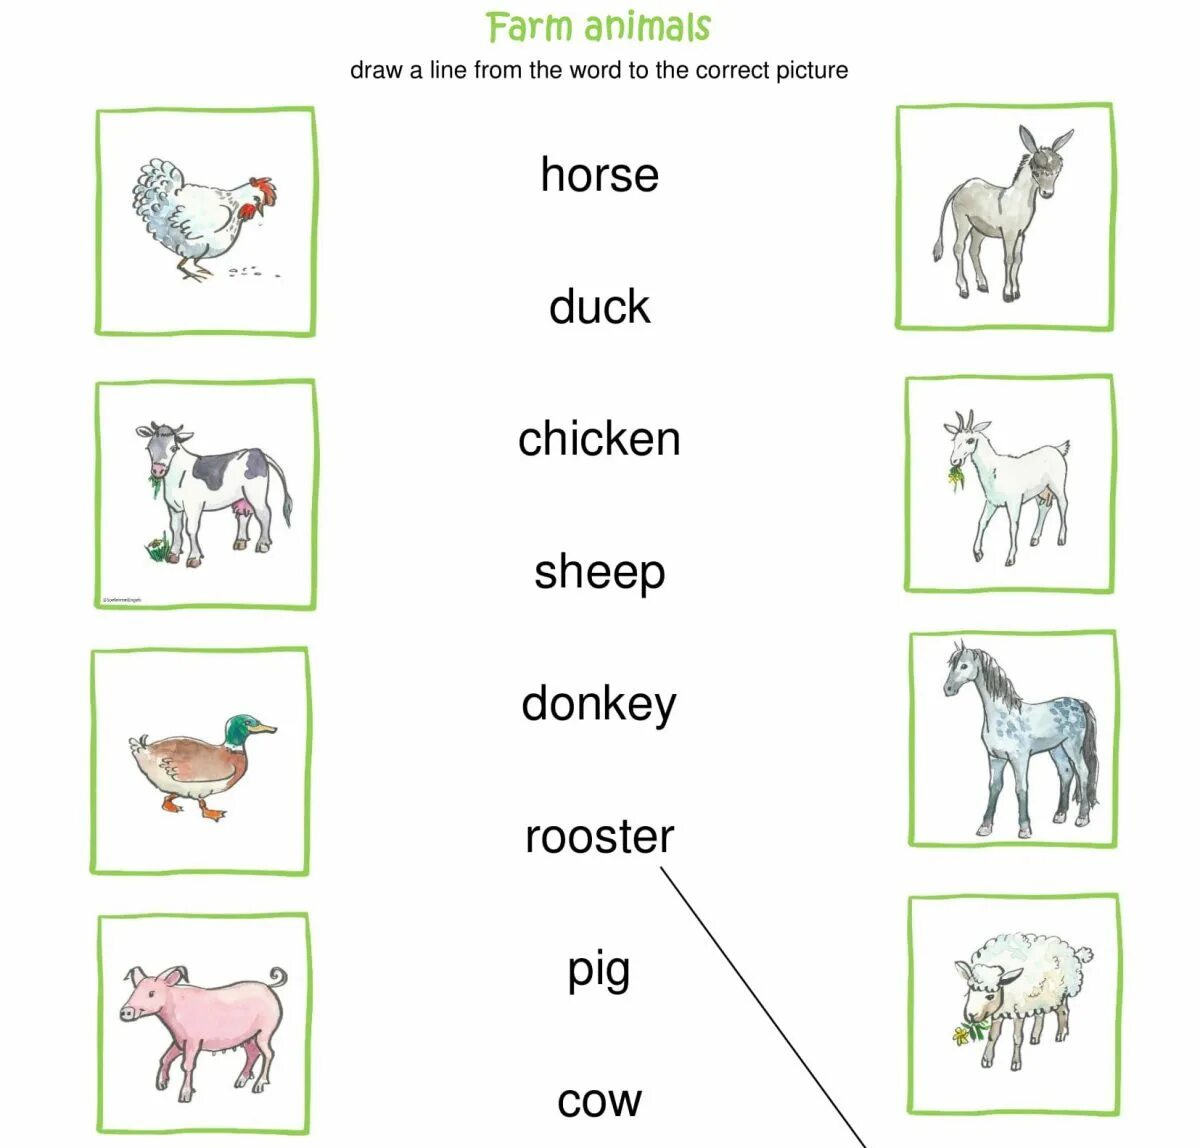 Domestic animals задания. Farm animals задания для детей. Задания про животных на английском. Животные на английском для детей задания. Farm animals worksheet